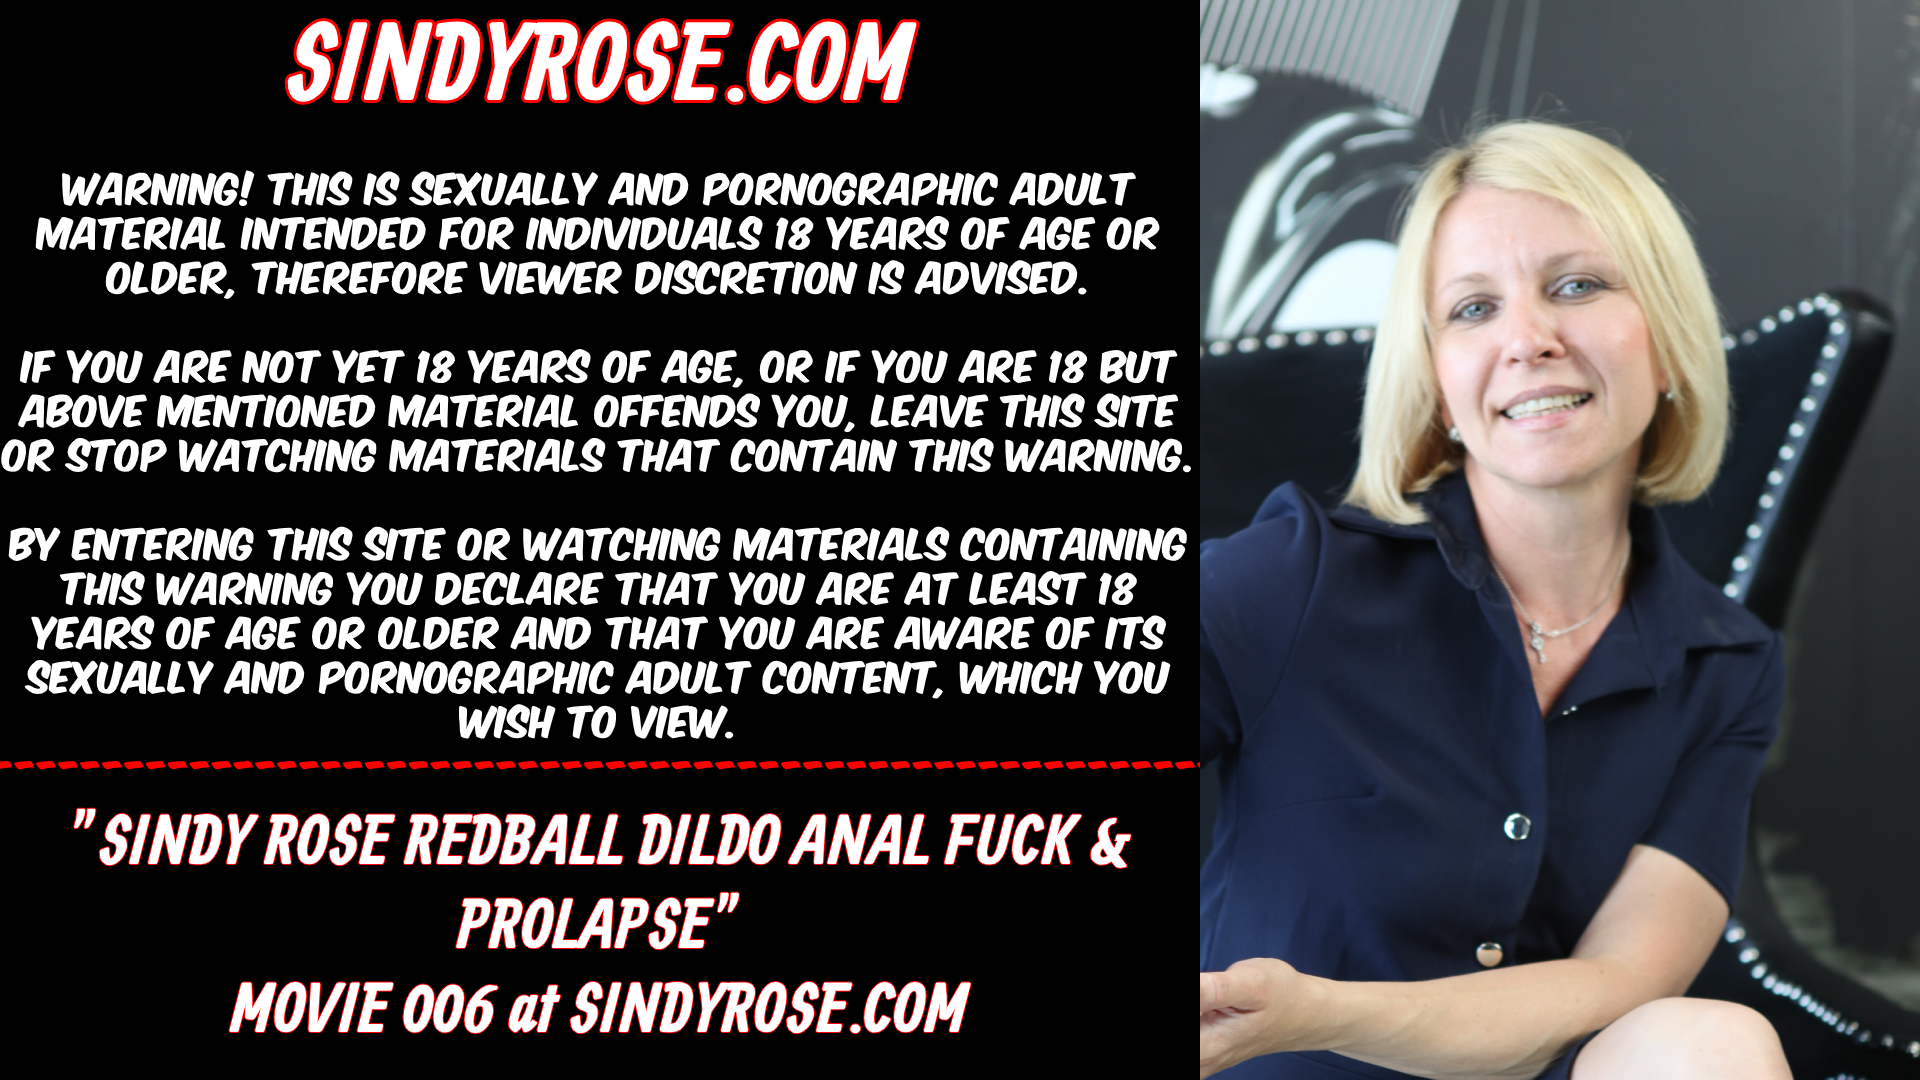 Sindyrose redball dildo anal fuck